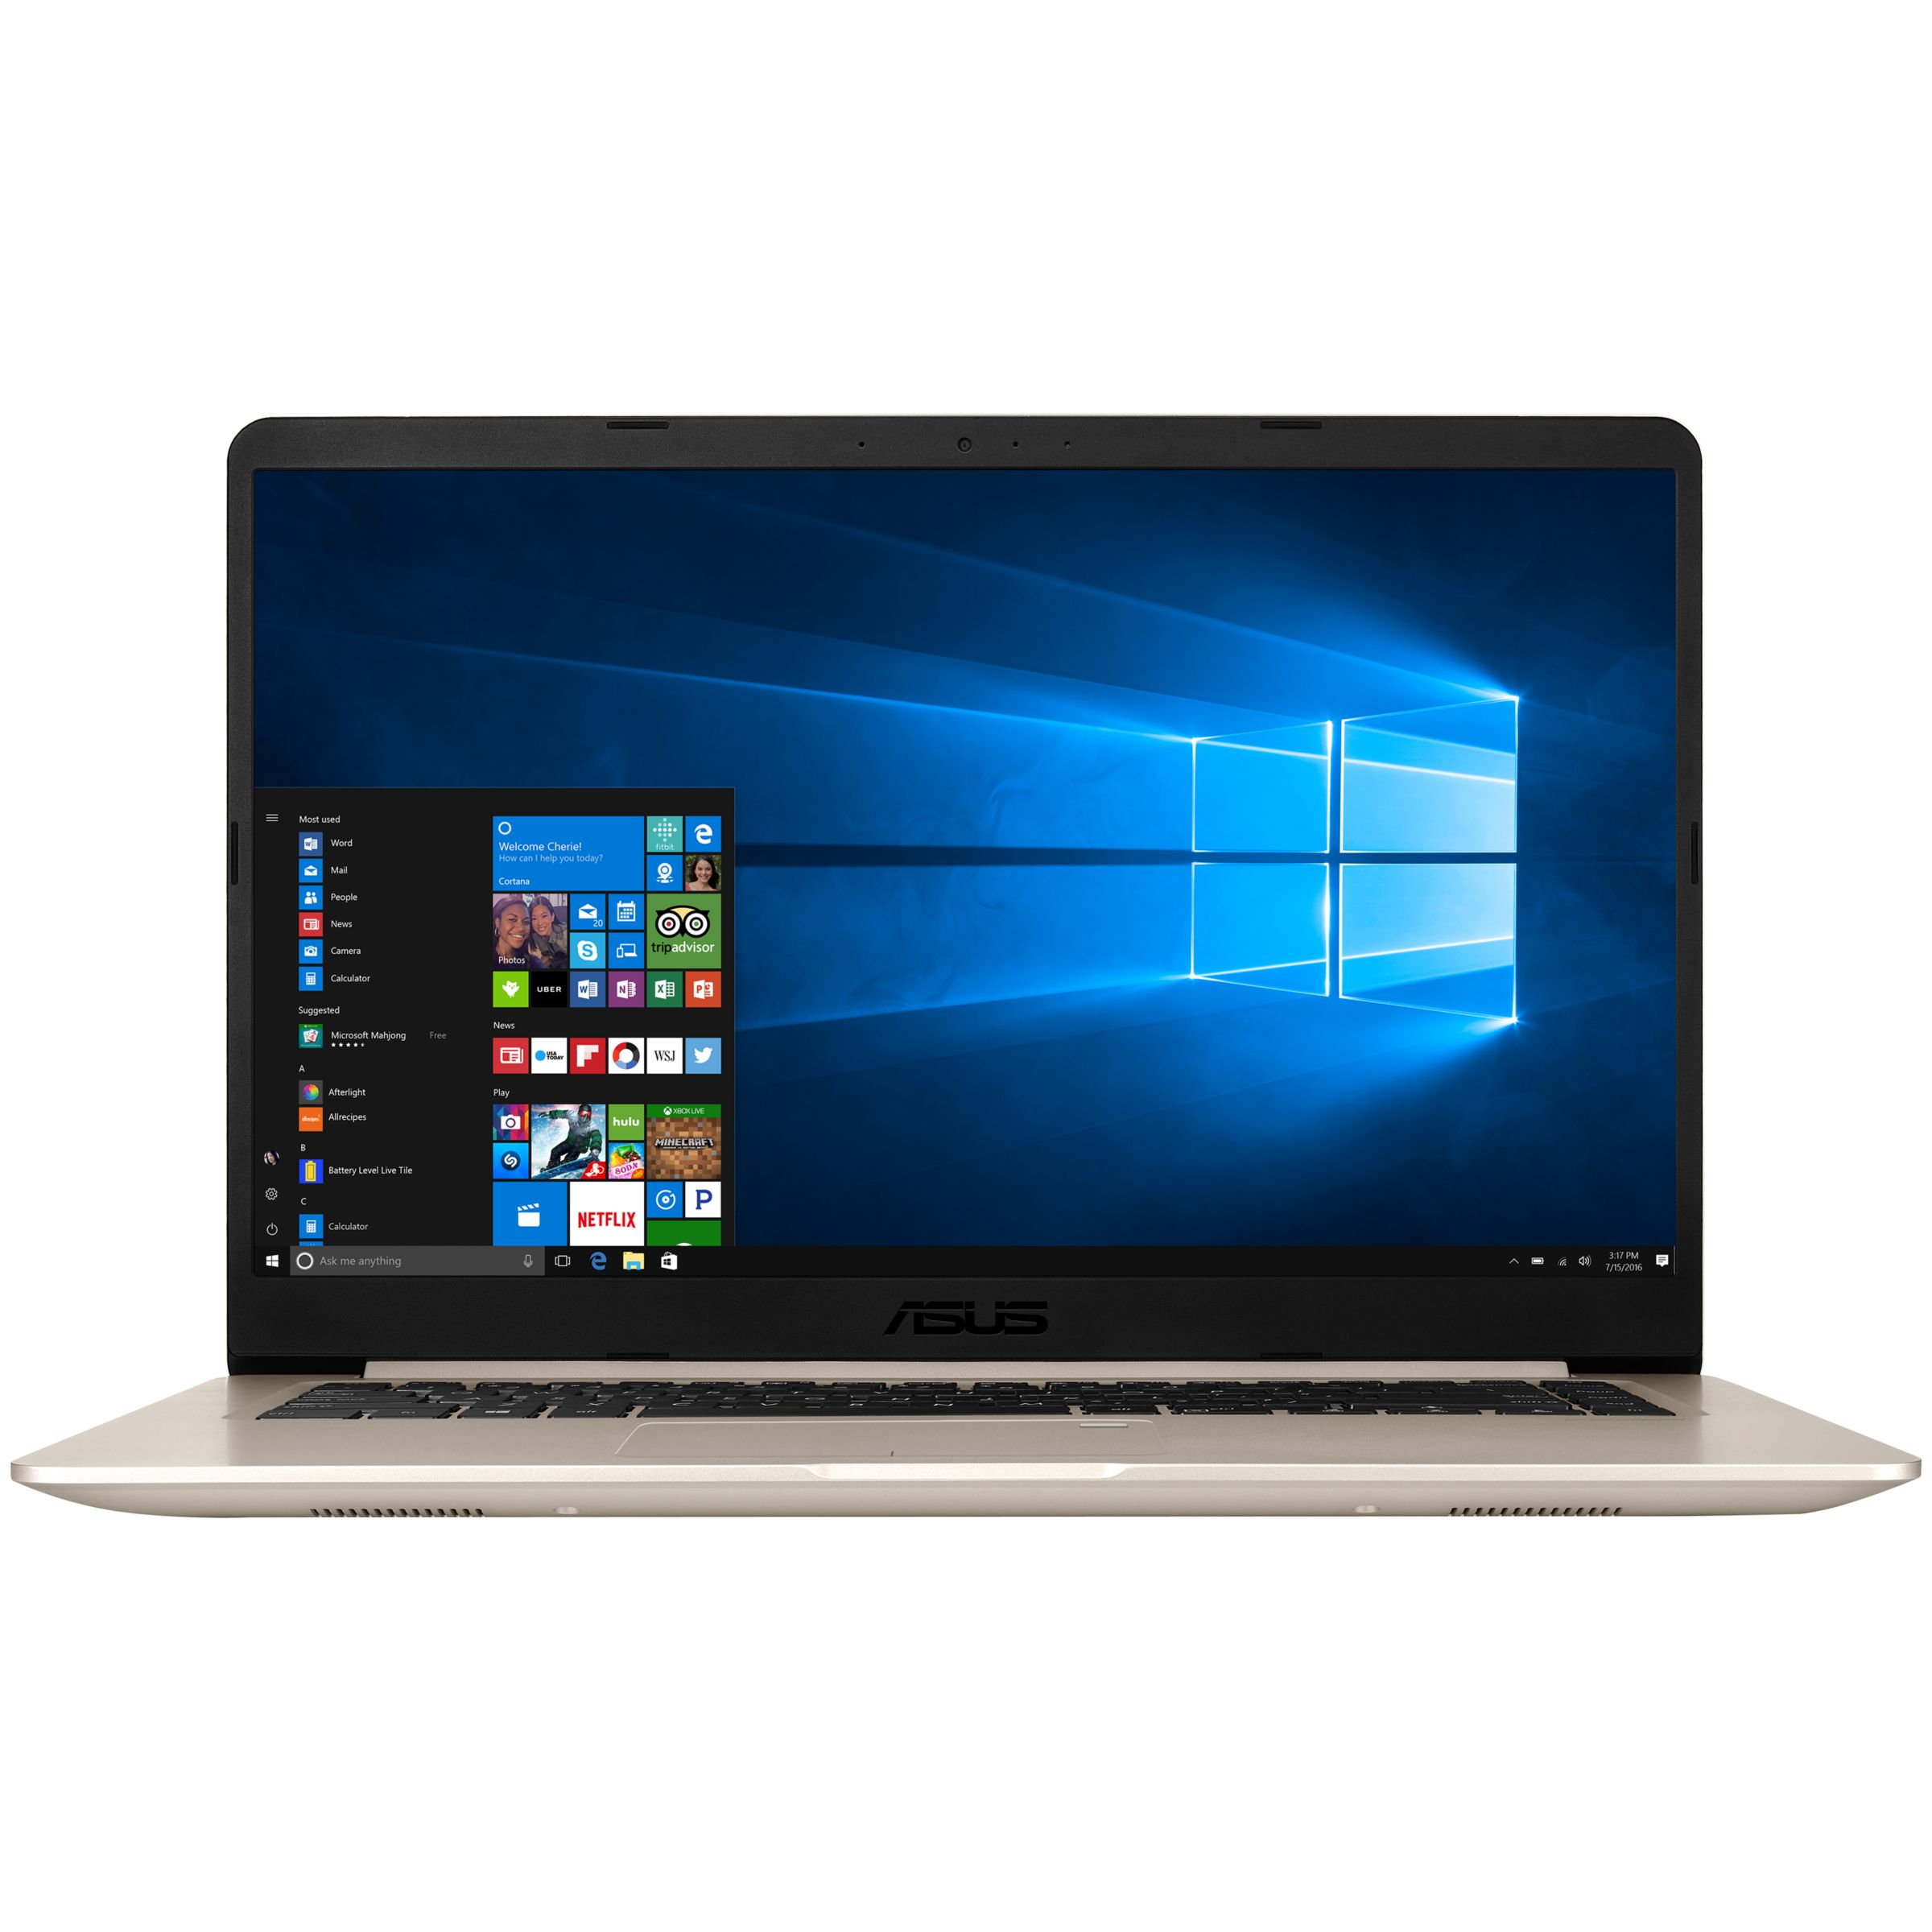 Asus Vivobook S510 Laptop Intel Core I7 8gb Ram 256gb Ssd 156